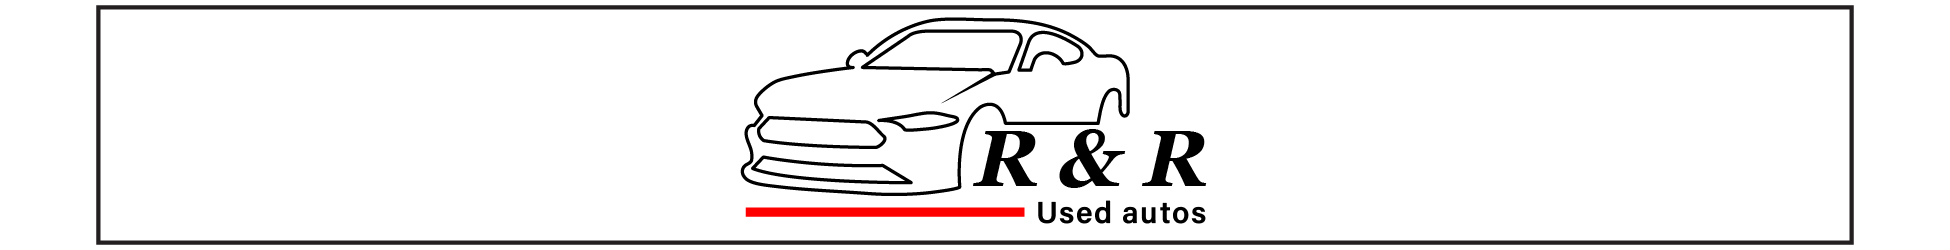 R & R Used Autos 468 X 60